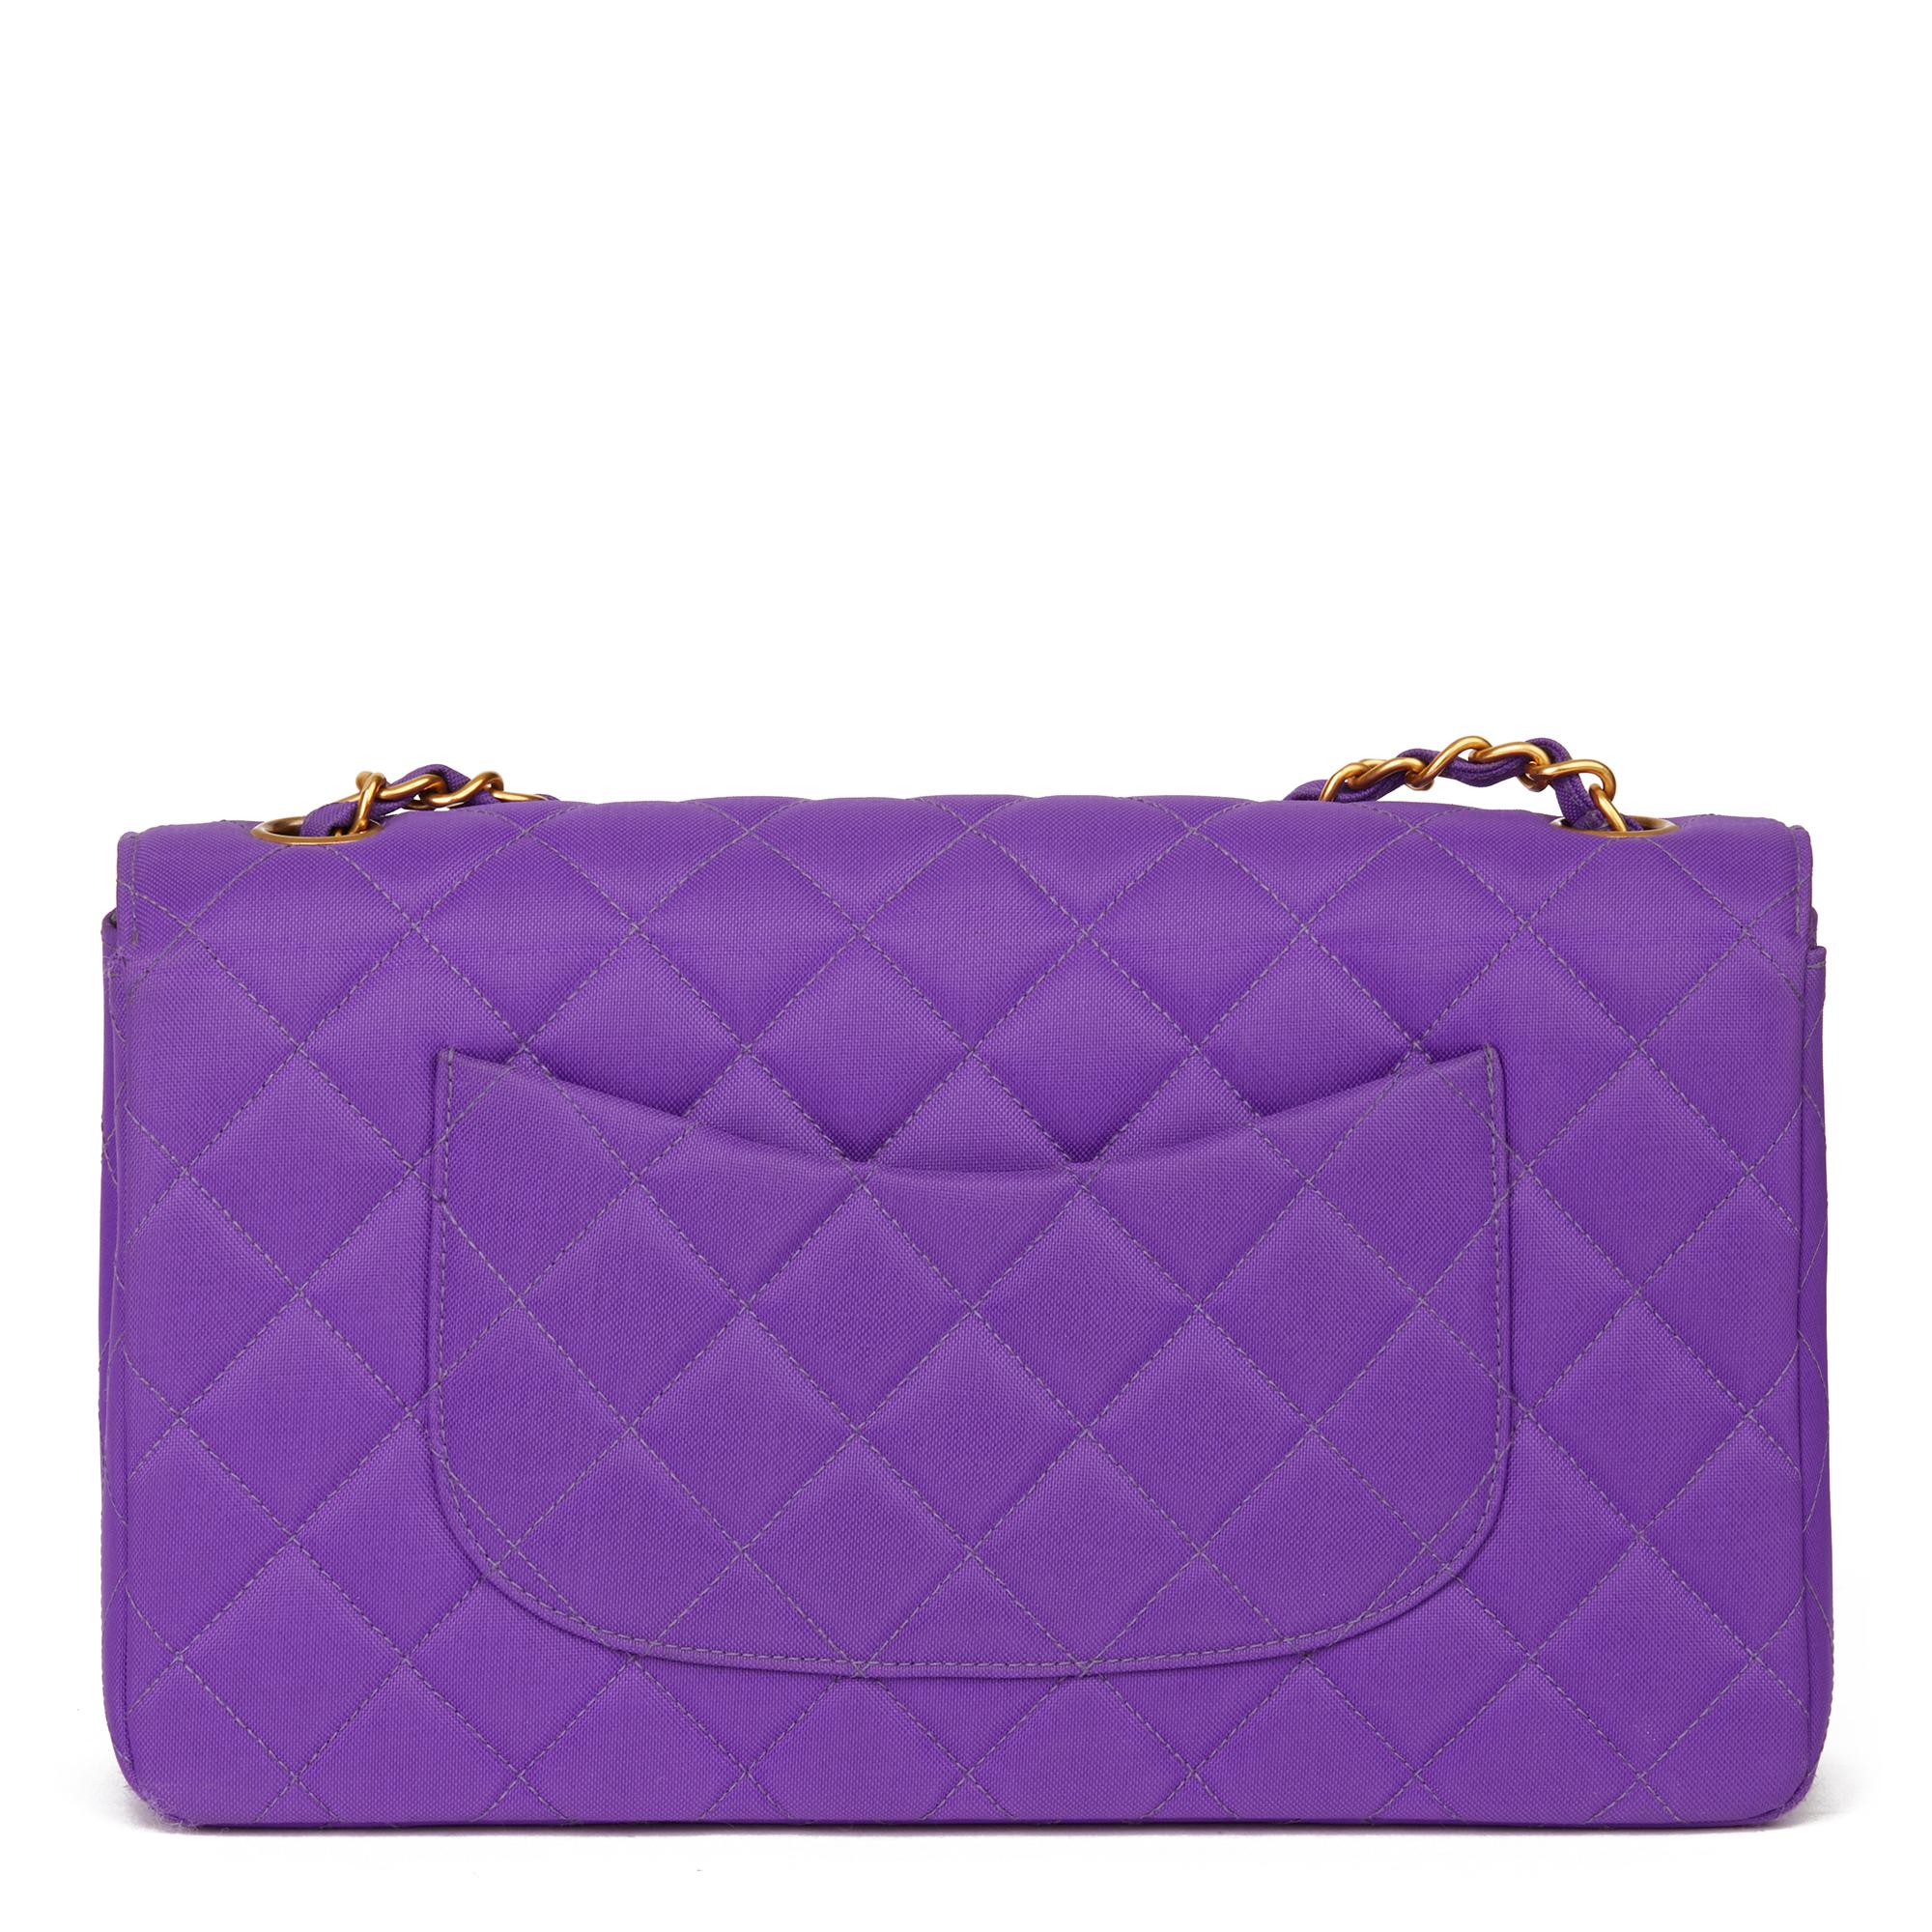 chanel purple bag